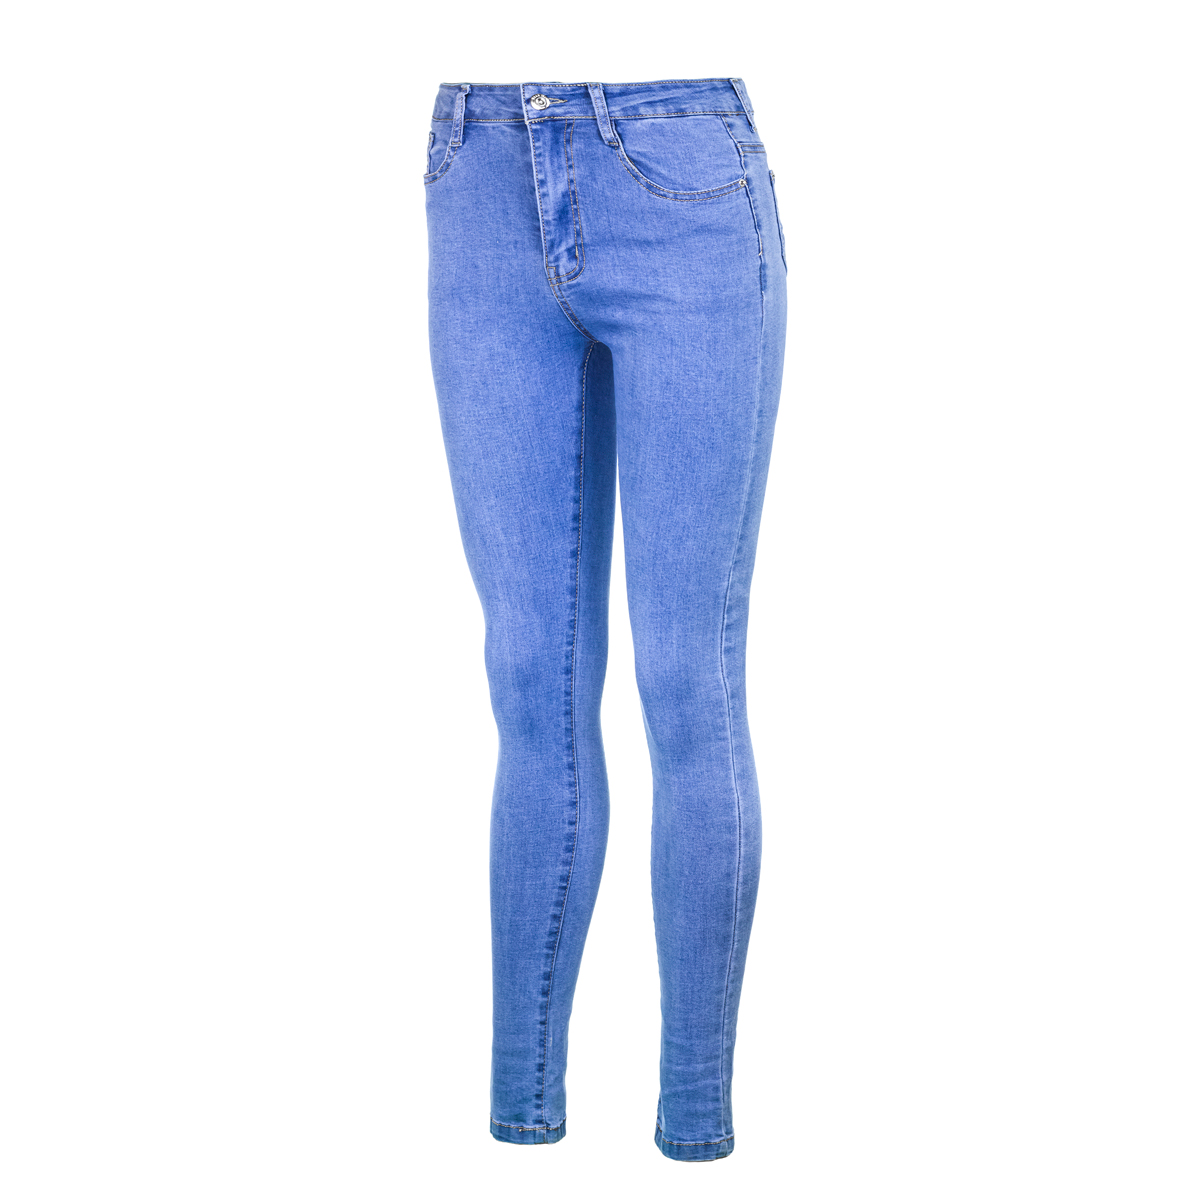 Жен. джинсы арт. 12-0155 Голубой р. 25 Китай, размер 25 - фото 2